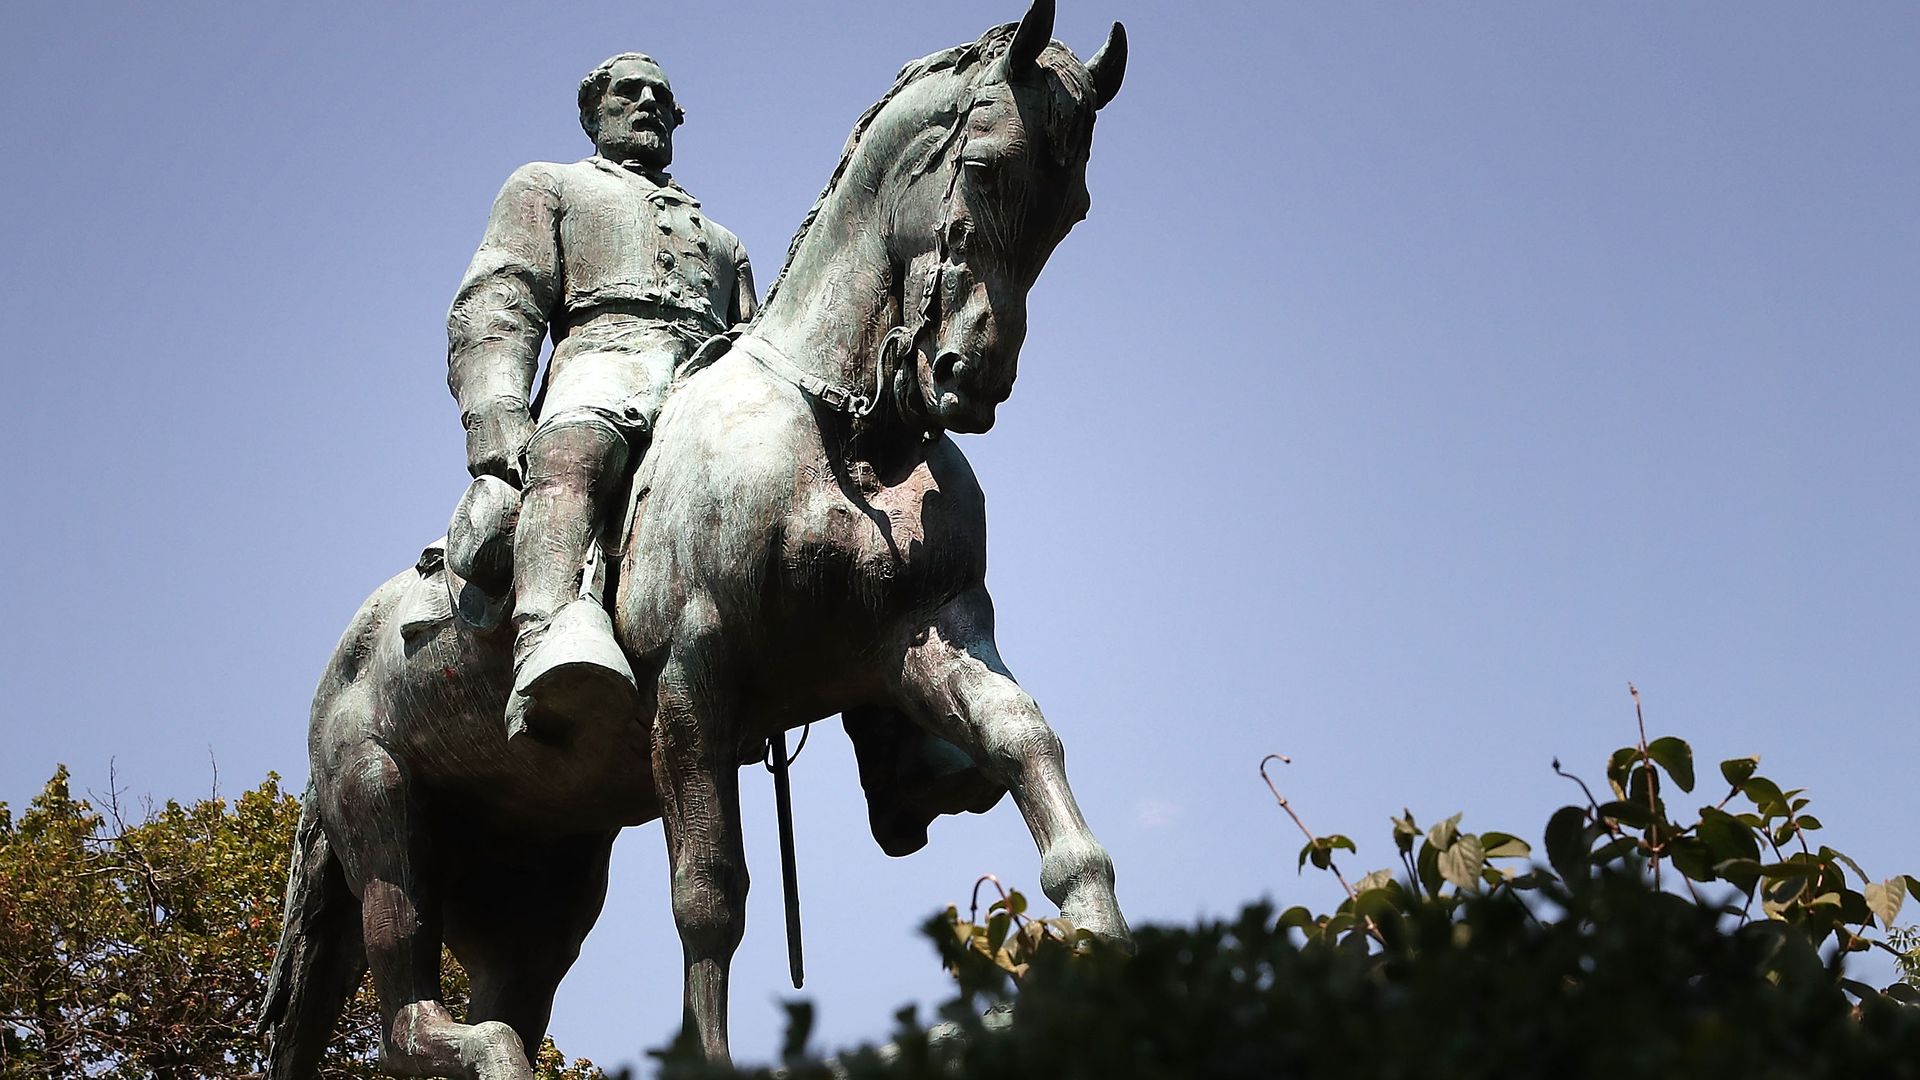 Statue of Confederate General Robert E. Lee on UVA's campus